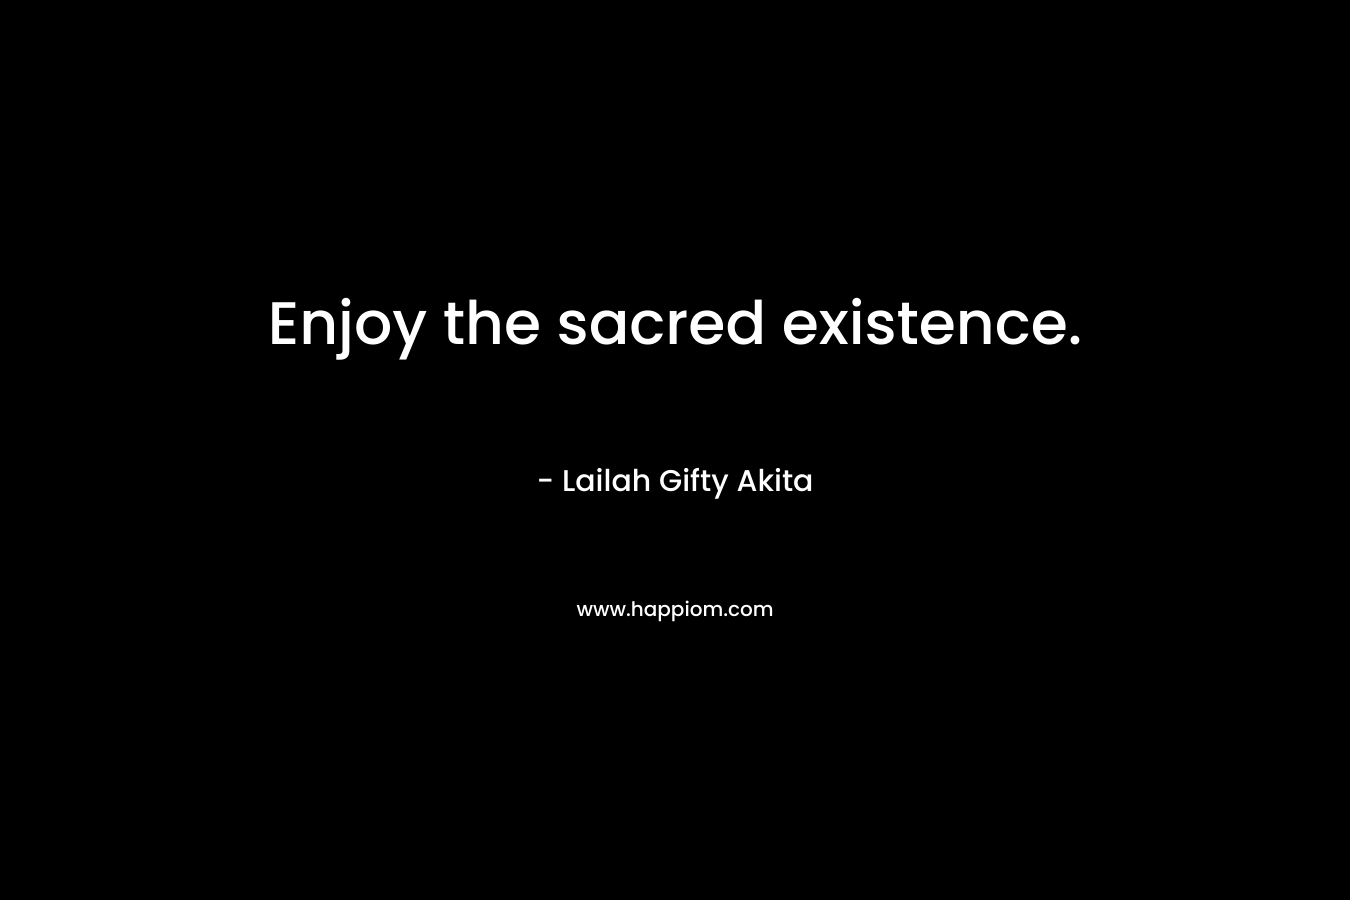 Enjoy the sacred existence.